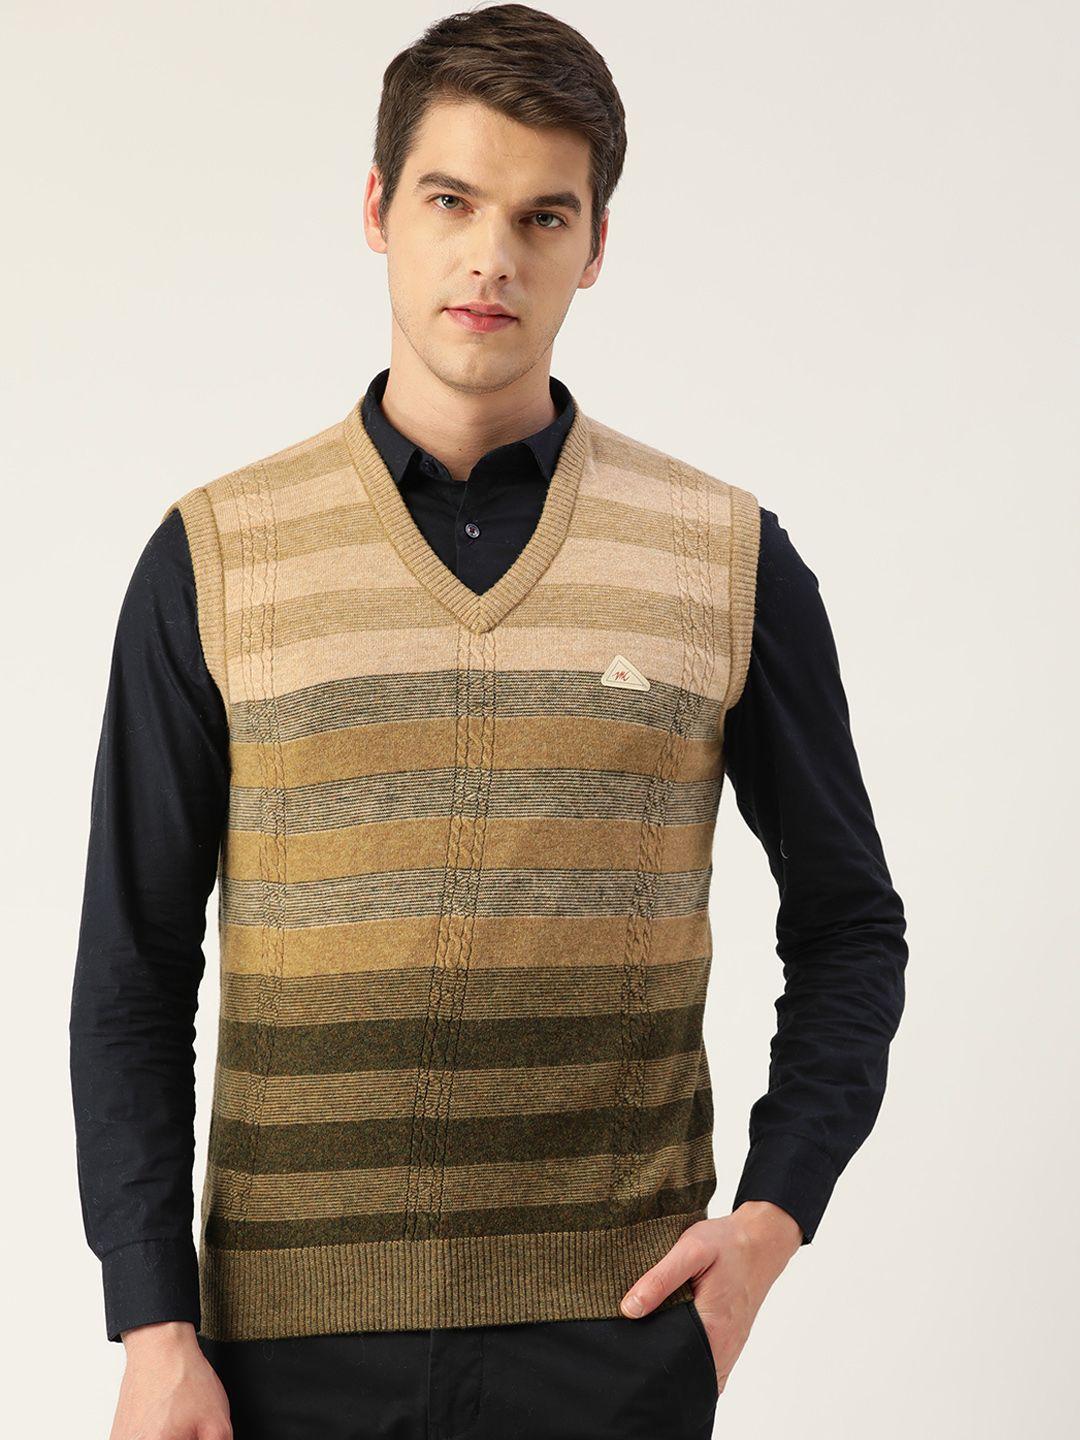 monte carlo men beige & olive green striped sweater vest